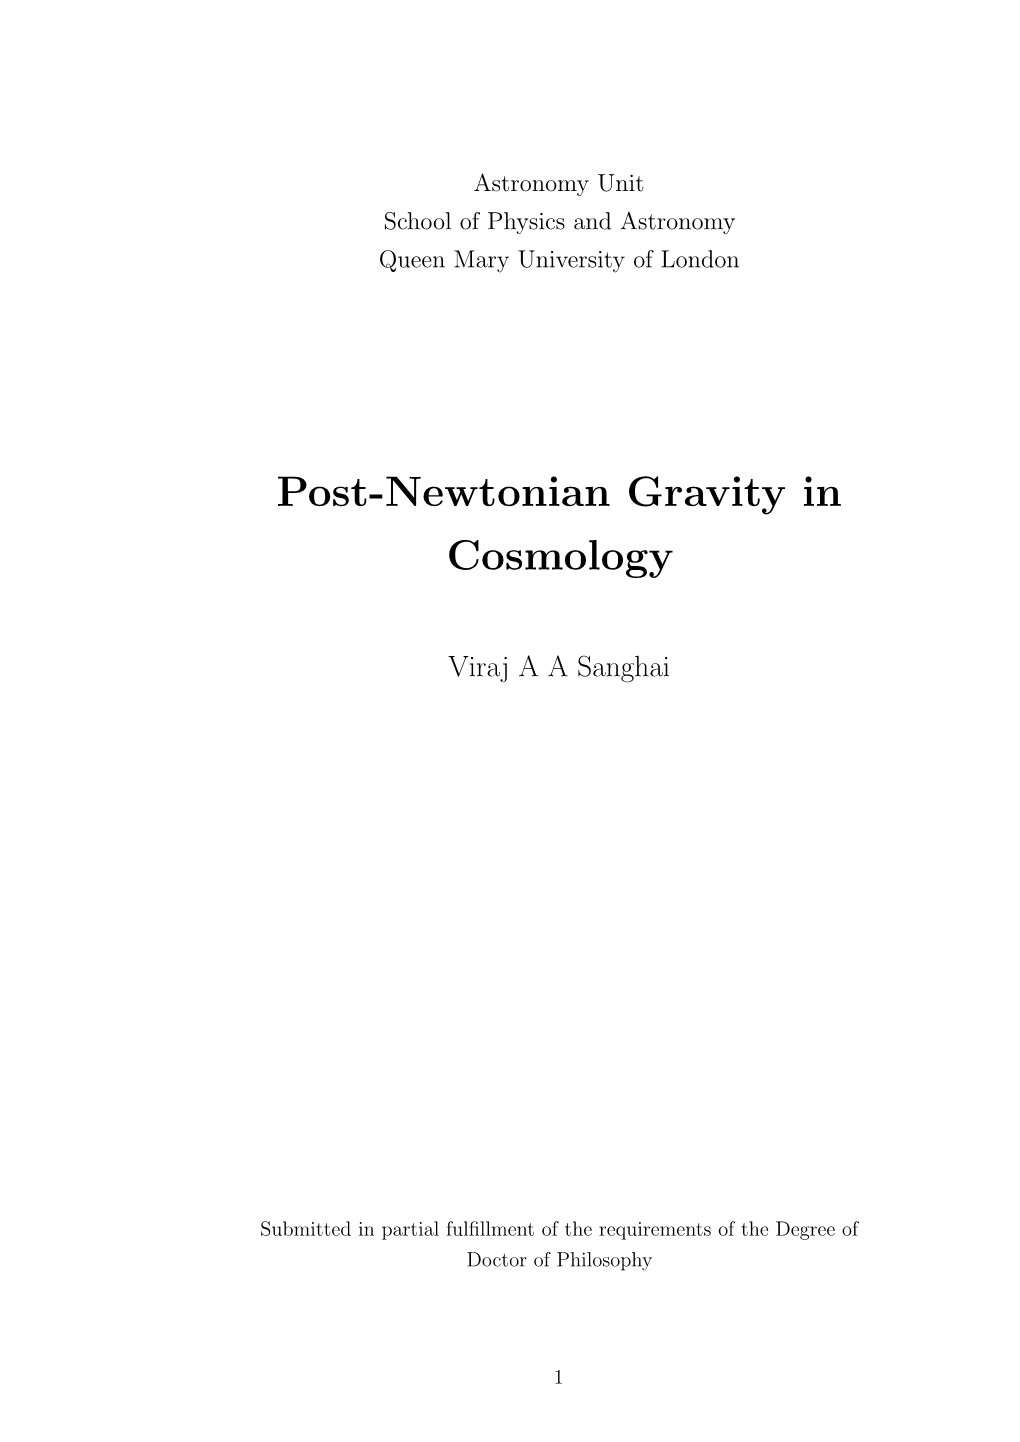 Post-Newtonian Gravity in Cosmology